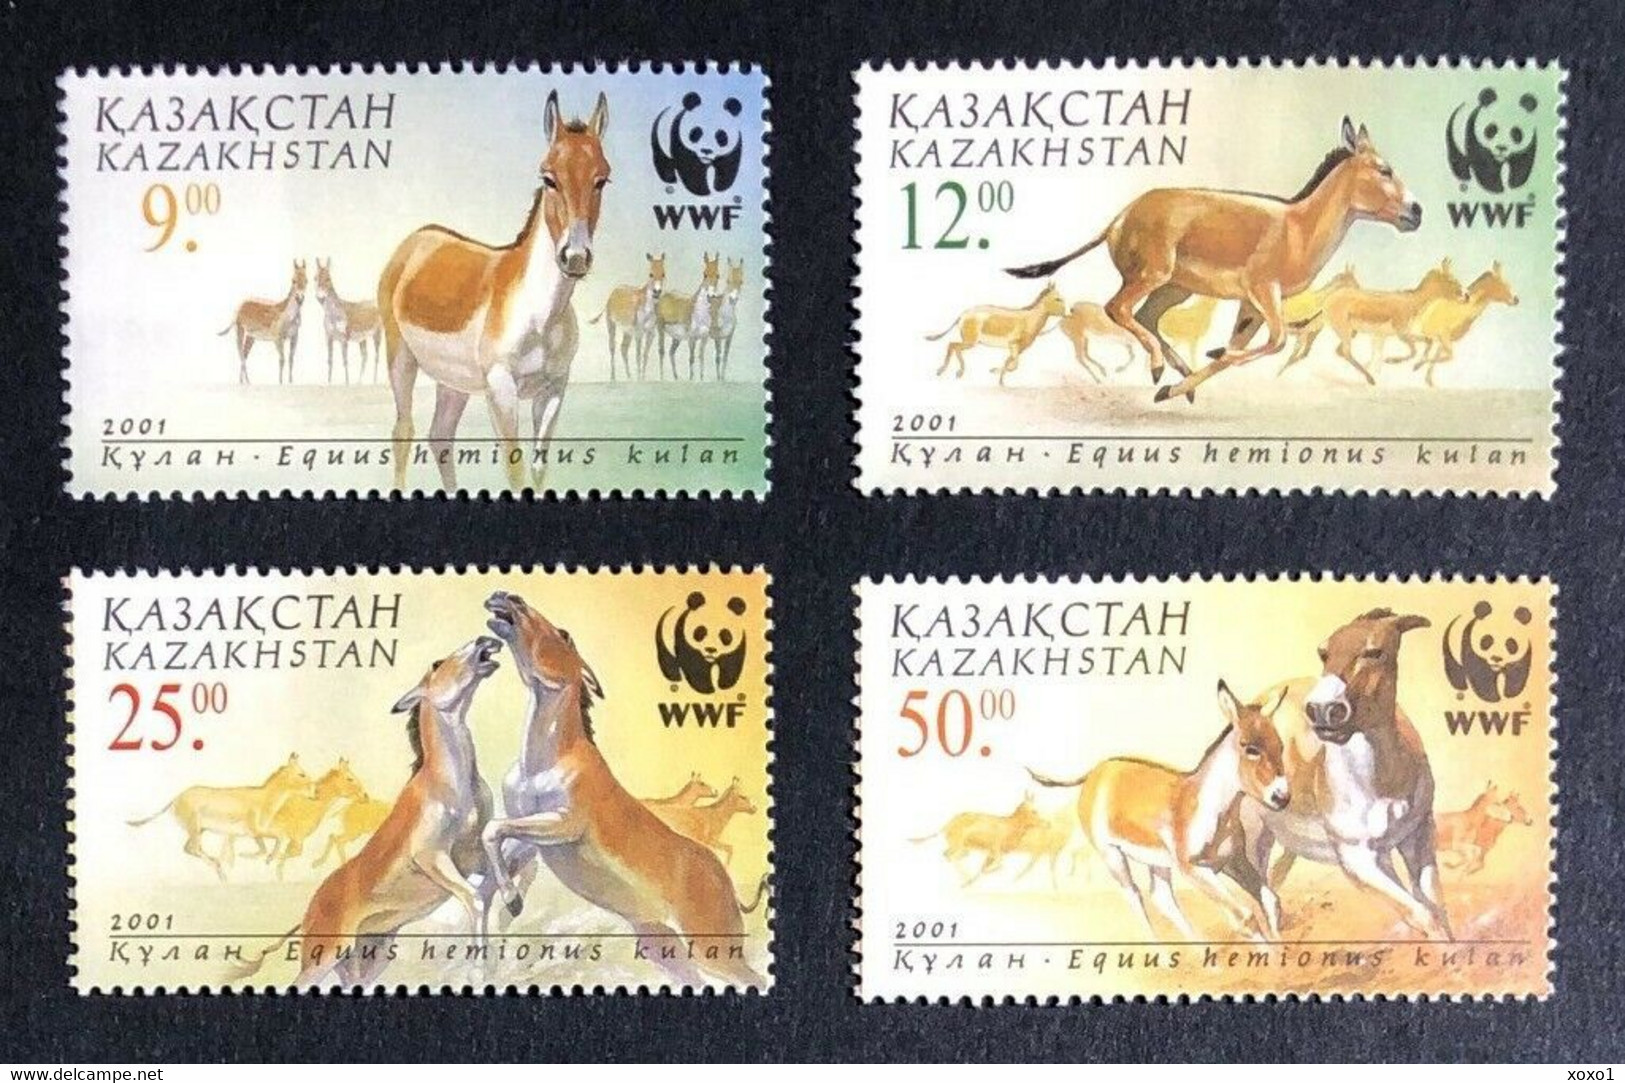 Kazakhstan 1997 MiNr. 345 - 348  Kasachstan  Animals Mammals Onager WWF 4v MNH** 5.00 € - Anes